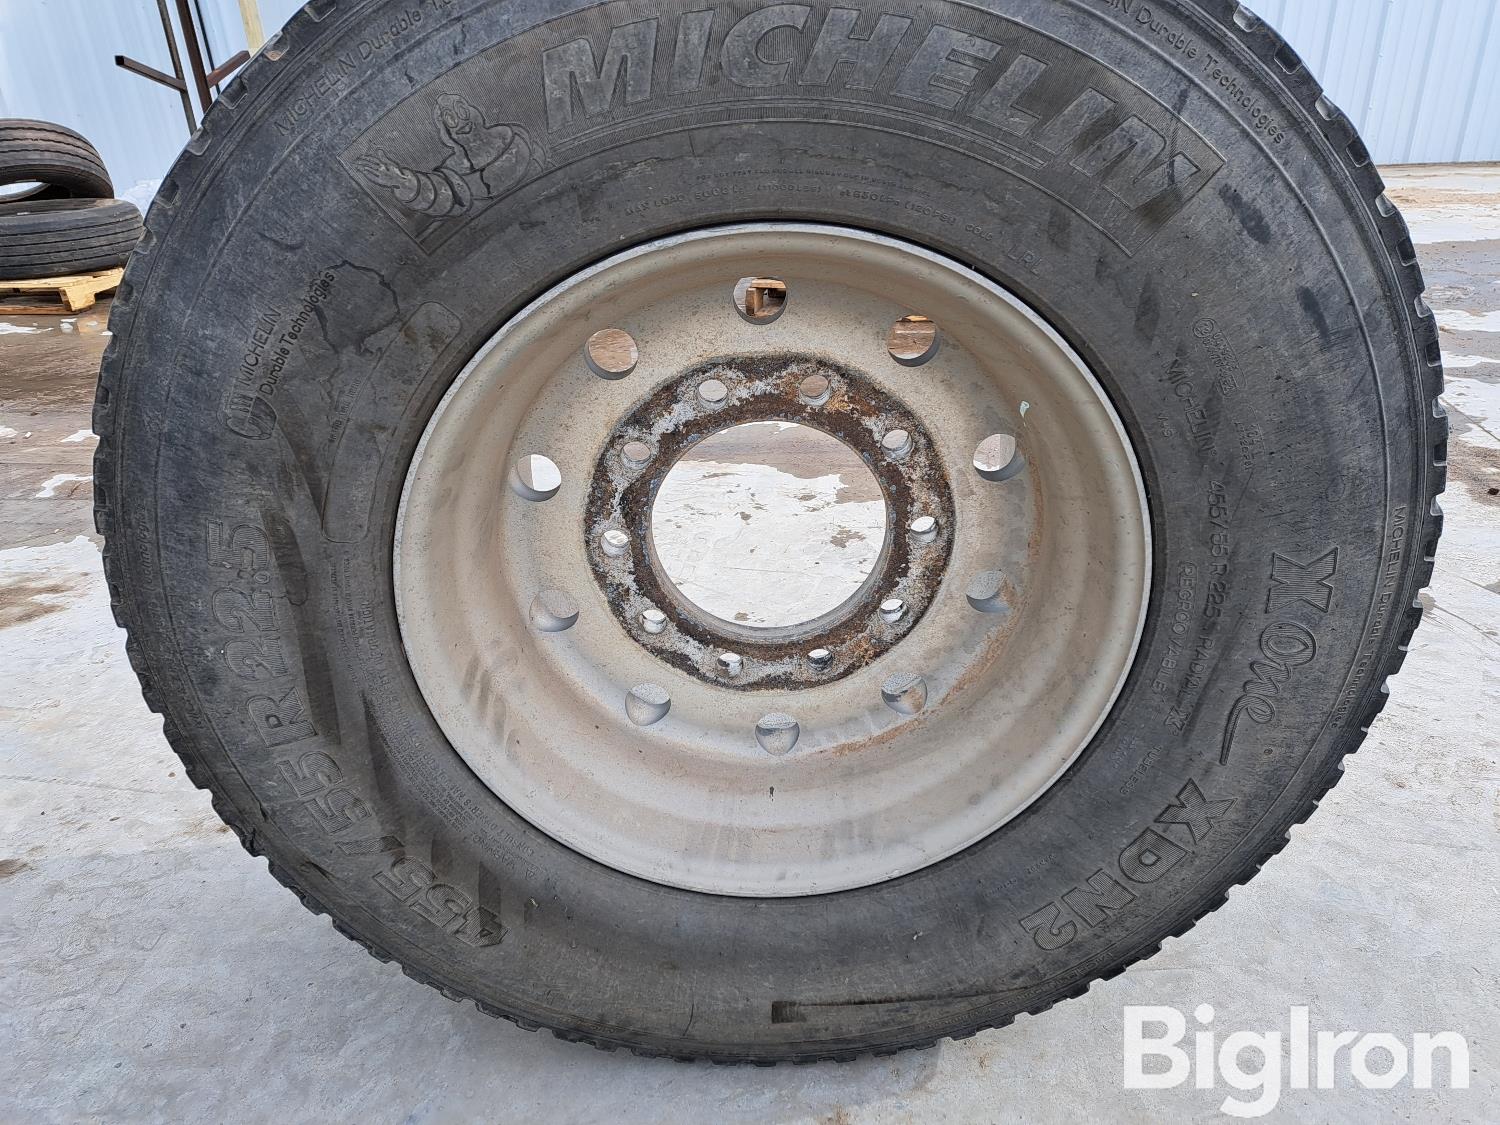 Michelin 455/55r22.5 Tire And Wheel BigIron Auctions